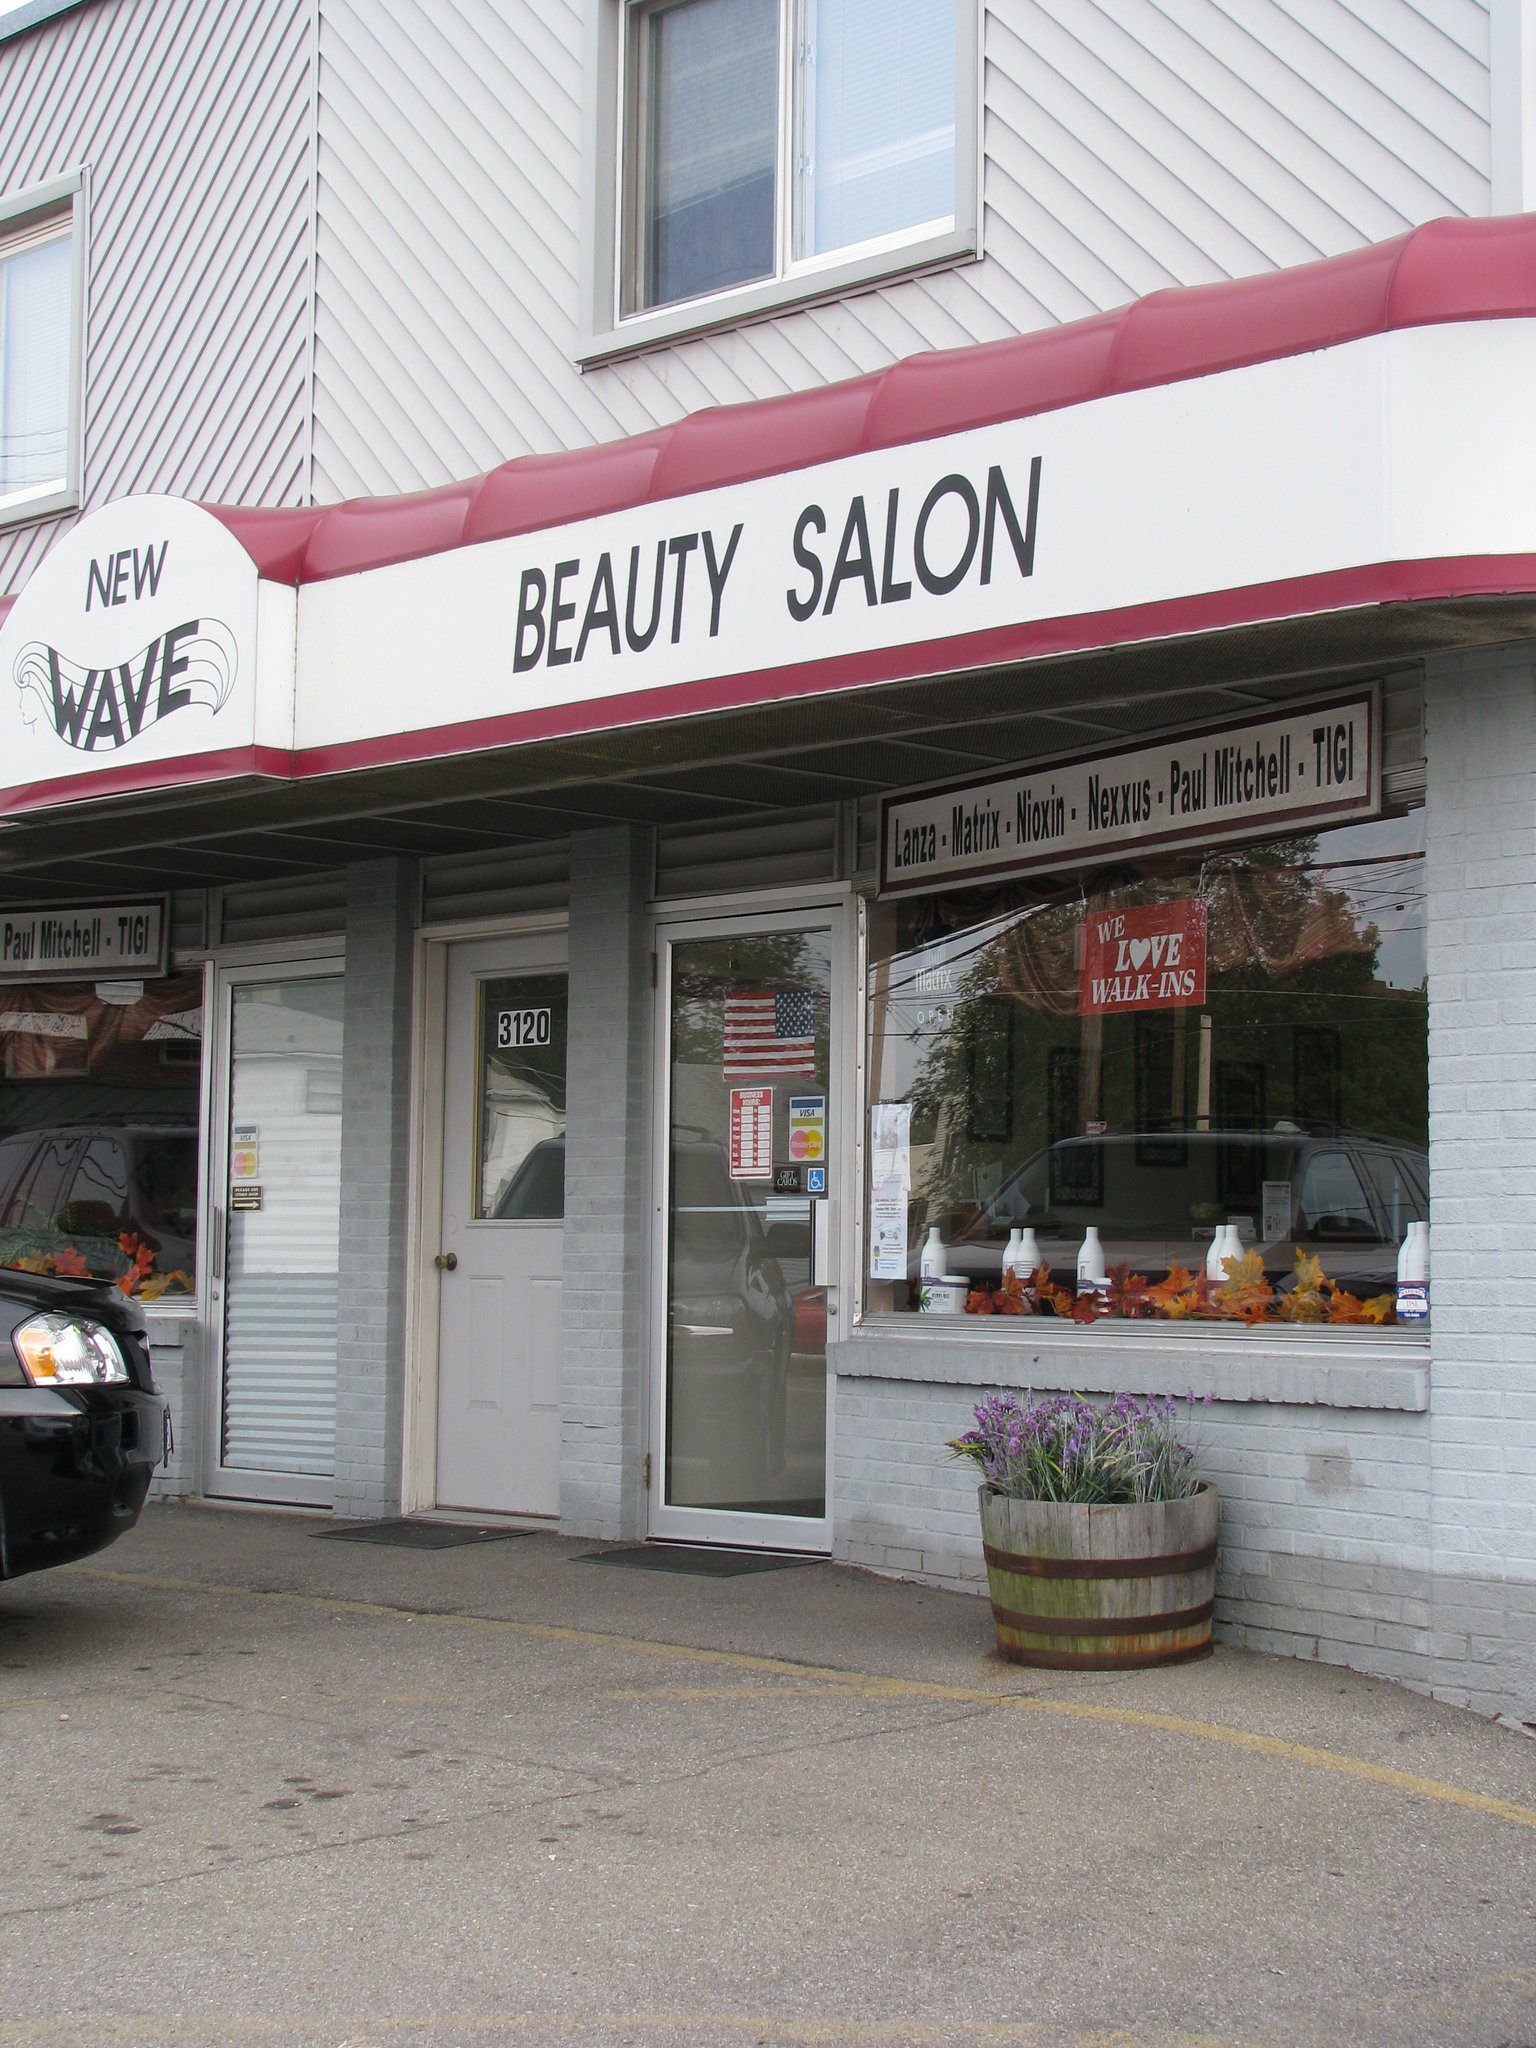 New Wave Beauty Salon 3120 E Main St, Endwell New York 13760